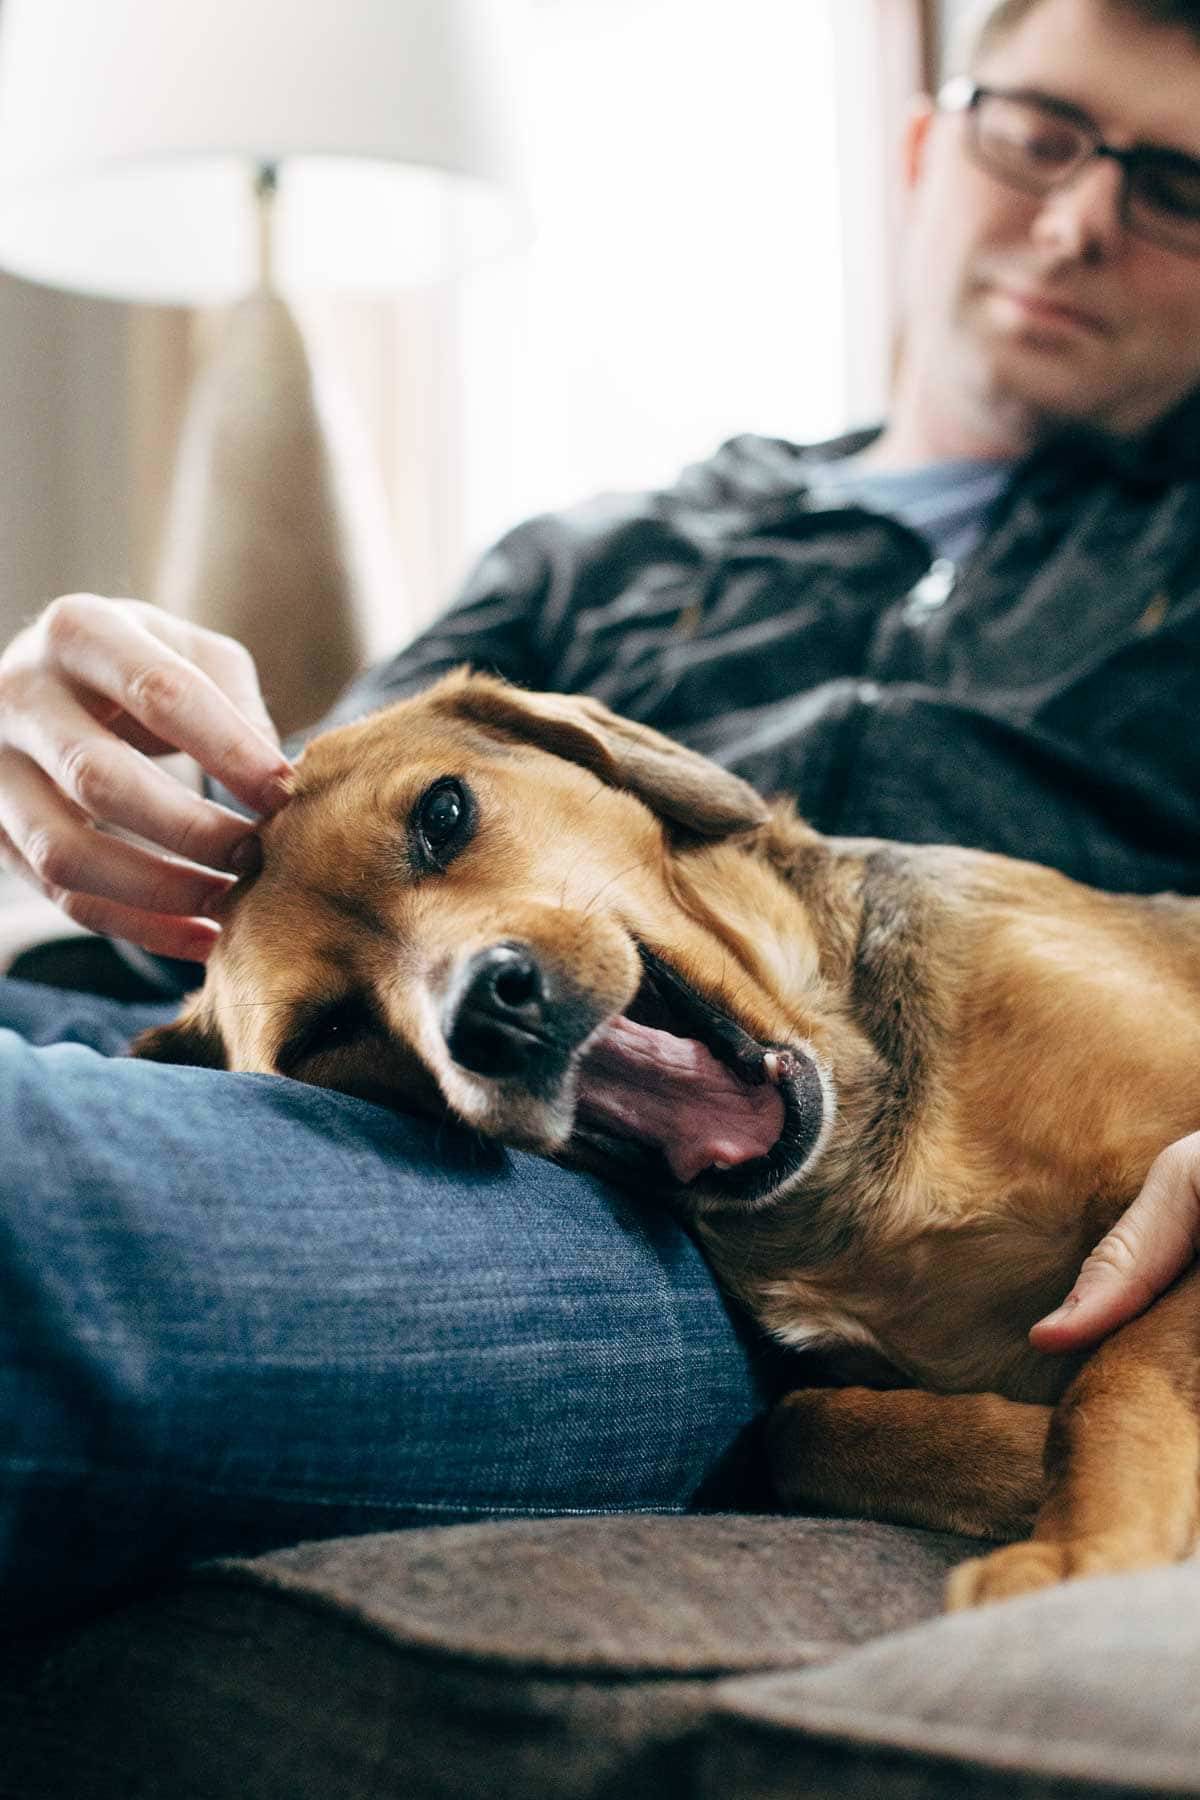 Dog yawning on a man's lap.